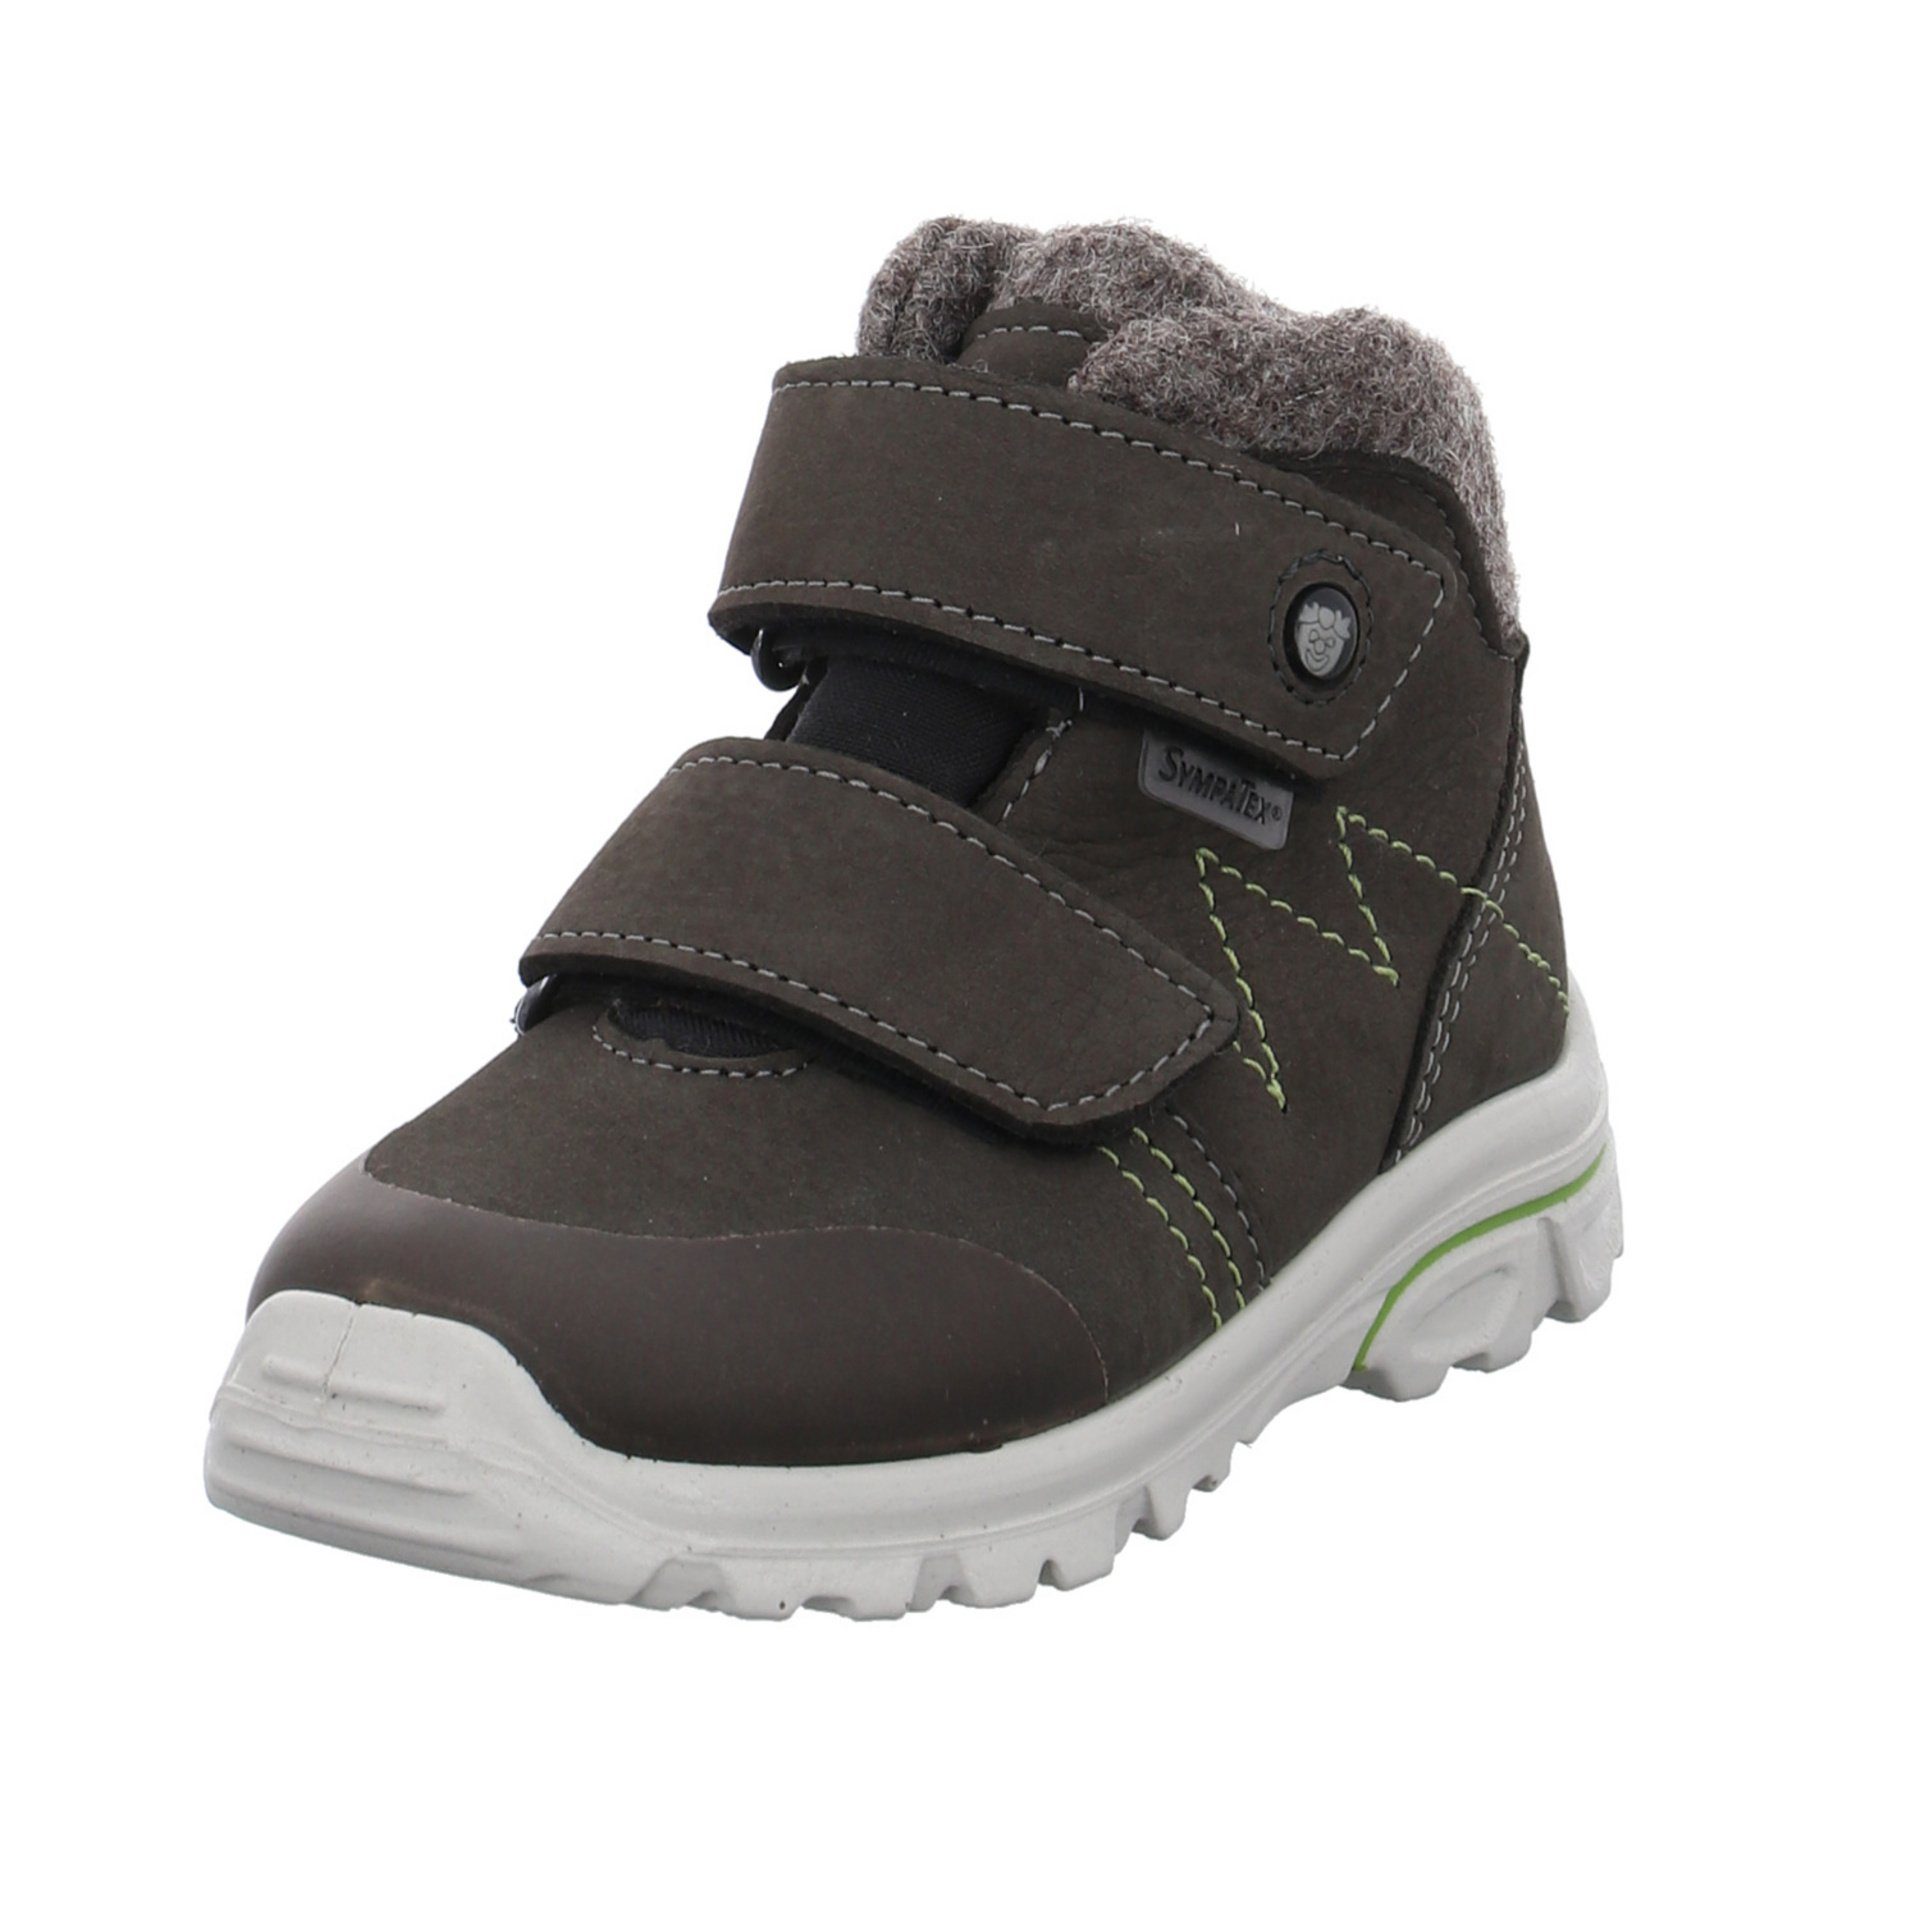 Krabbelschuhe Boots Leder-/Textilkombination Baby Ricosta Lauflernschuhe timo Dario Lauflernschuh Pepino